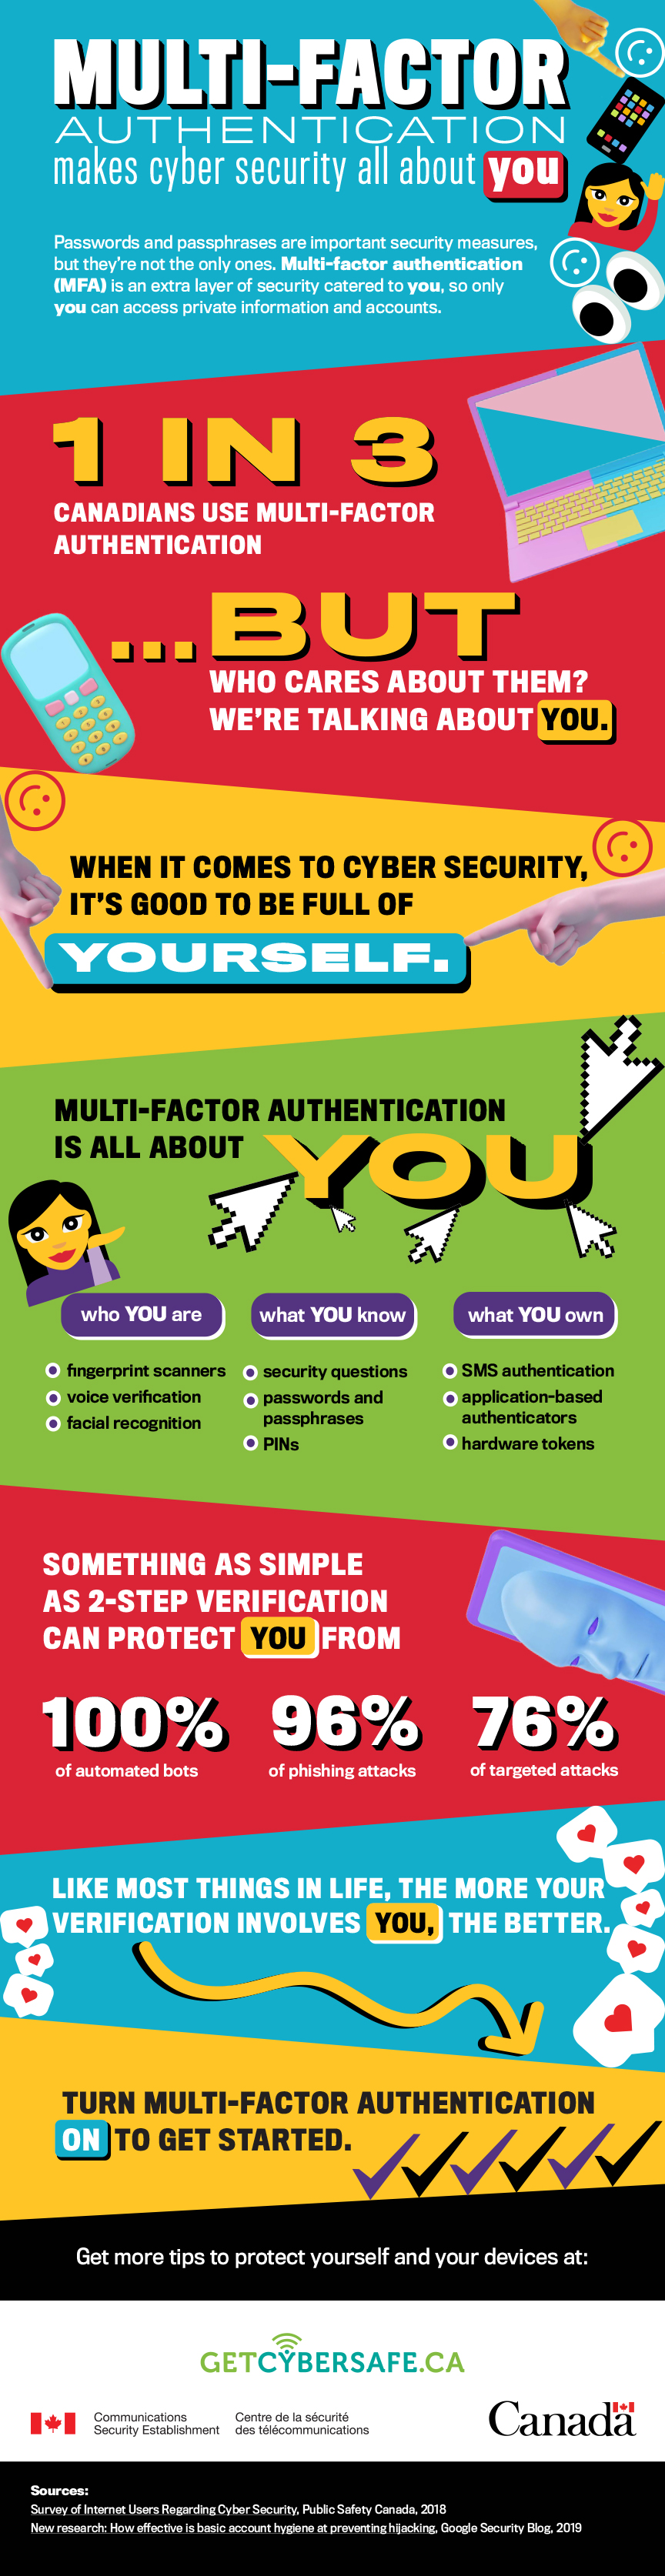 Multi-factor authentication - Long description immediately follows